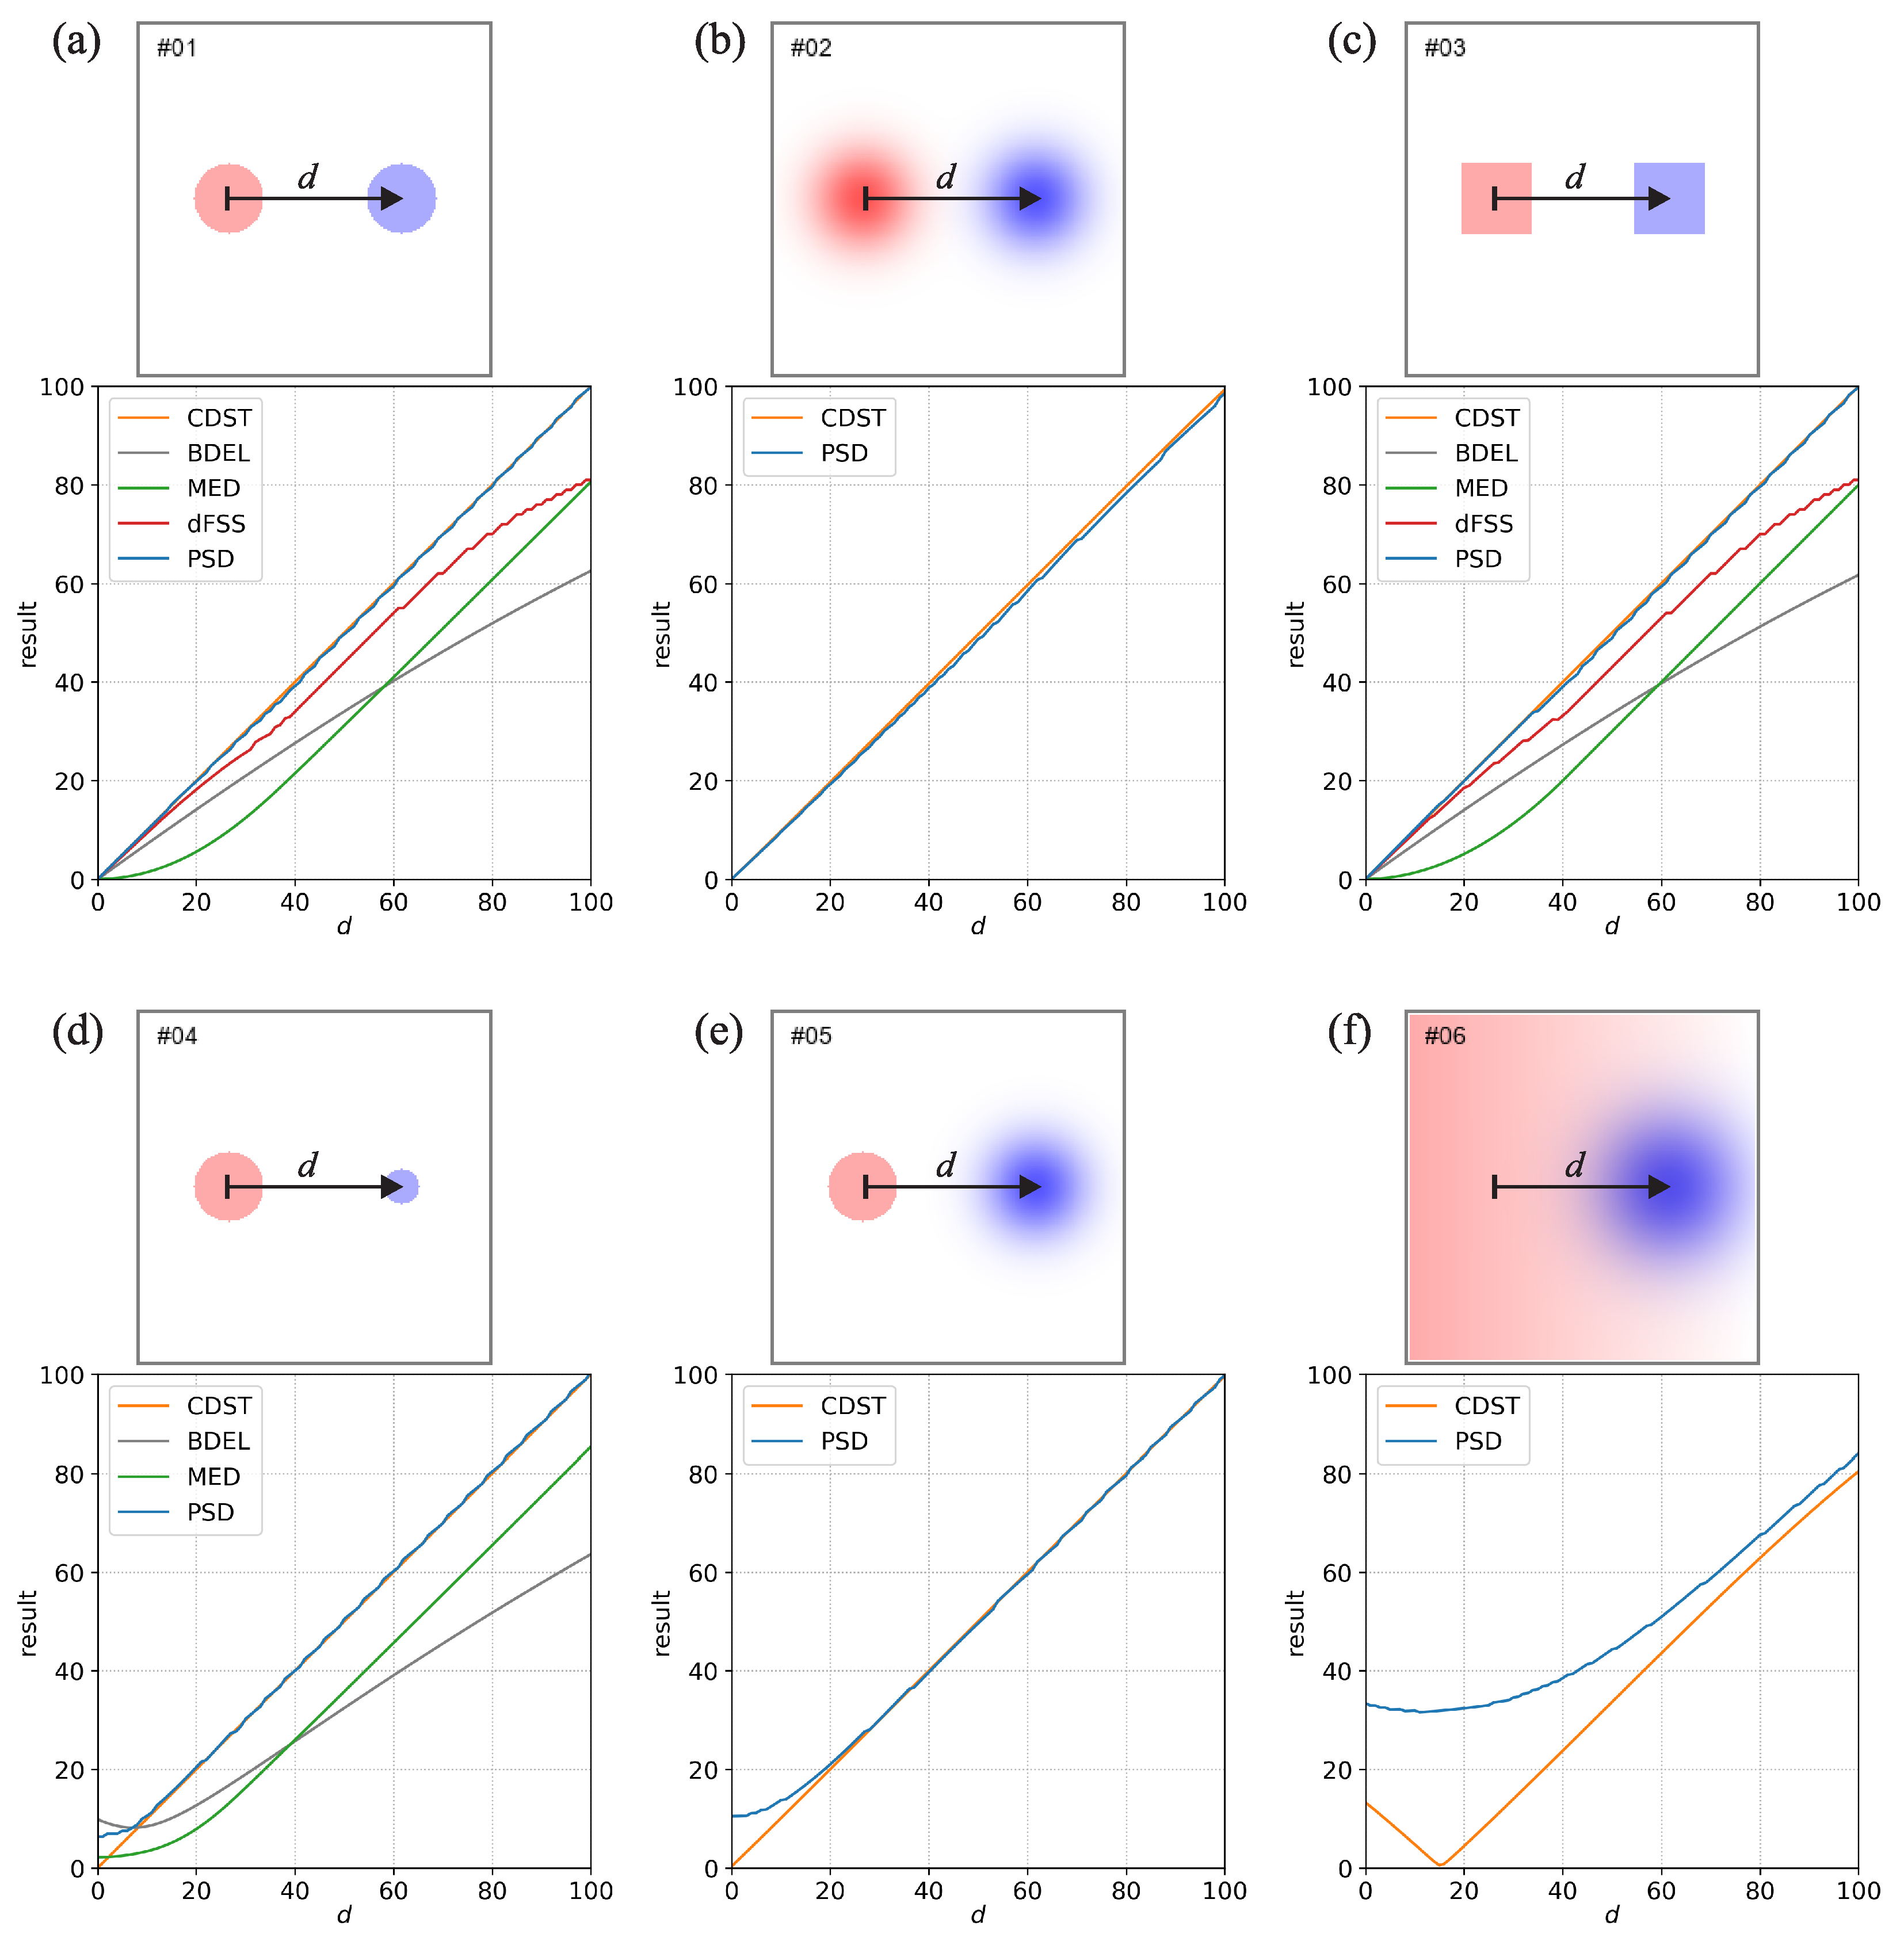 Range -- from Wolfram MathWorld